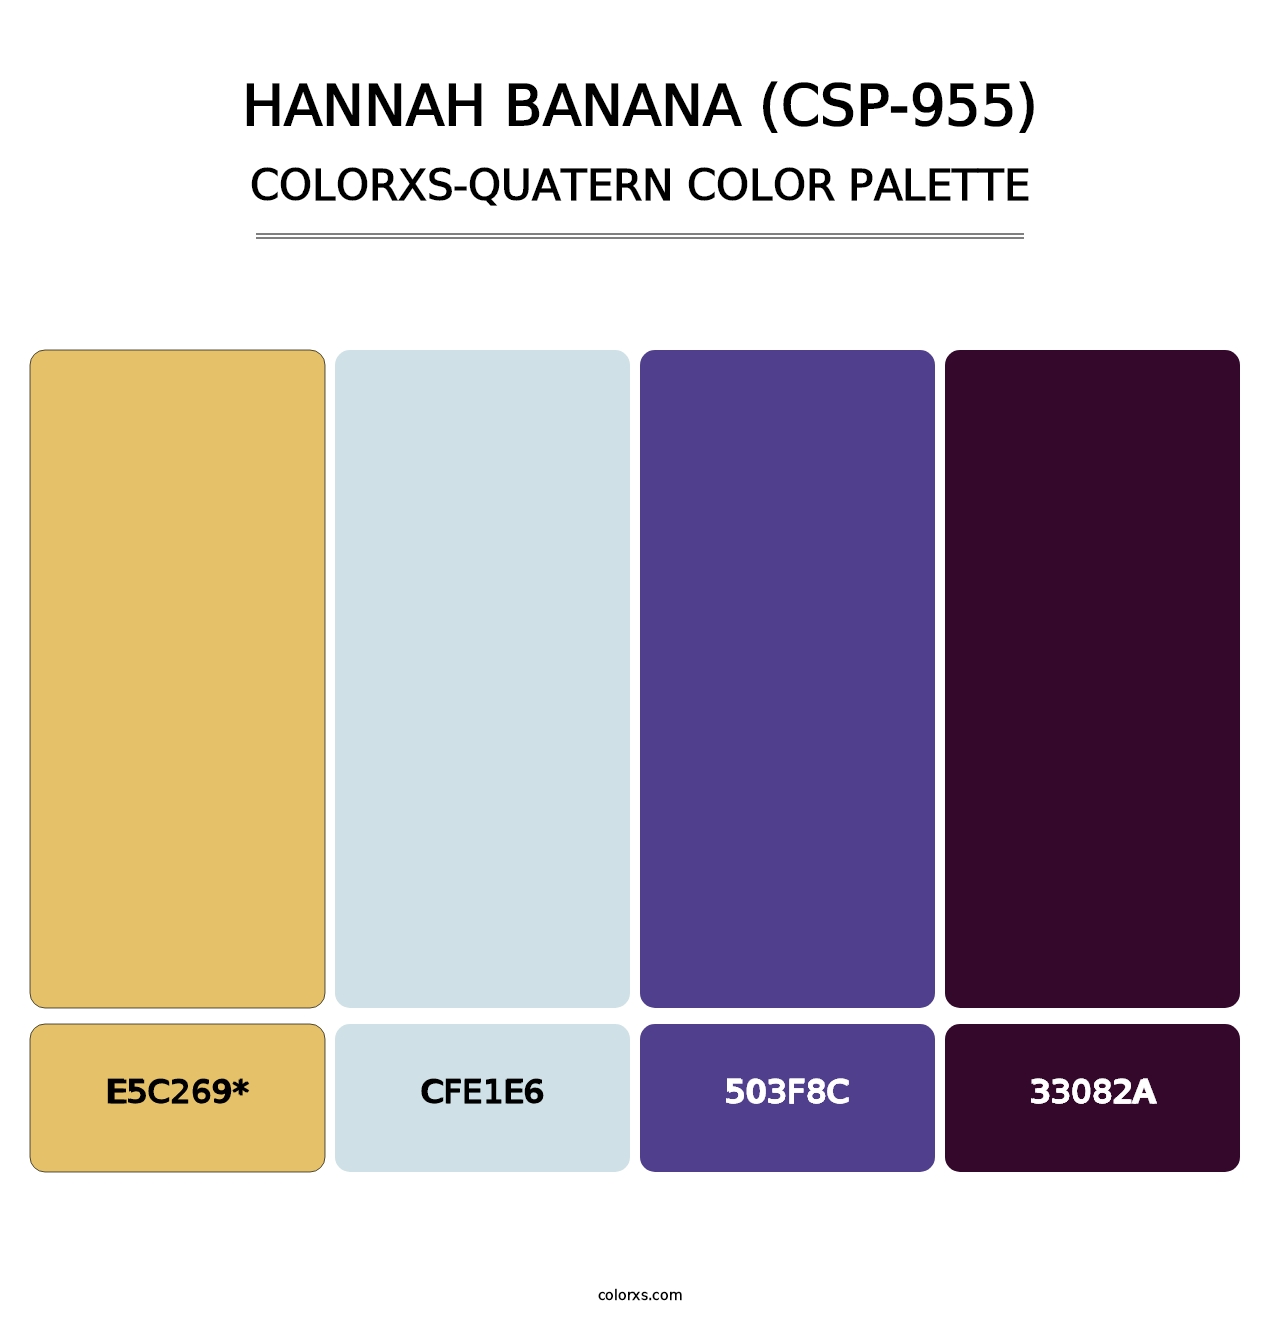 Hannah Banana (CSP-955) - Colorxs Quatern Palette